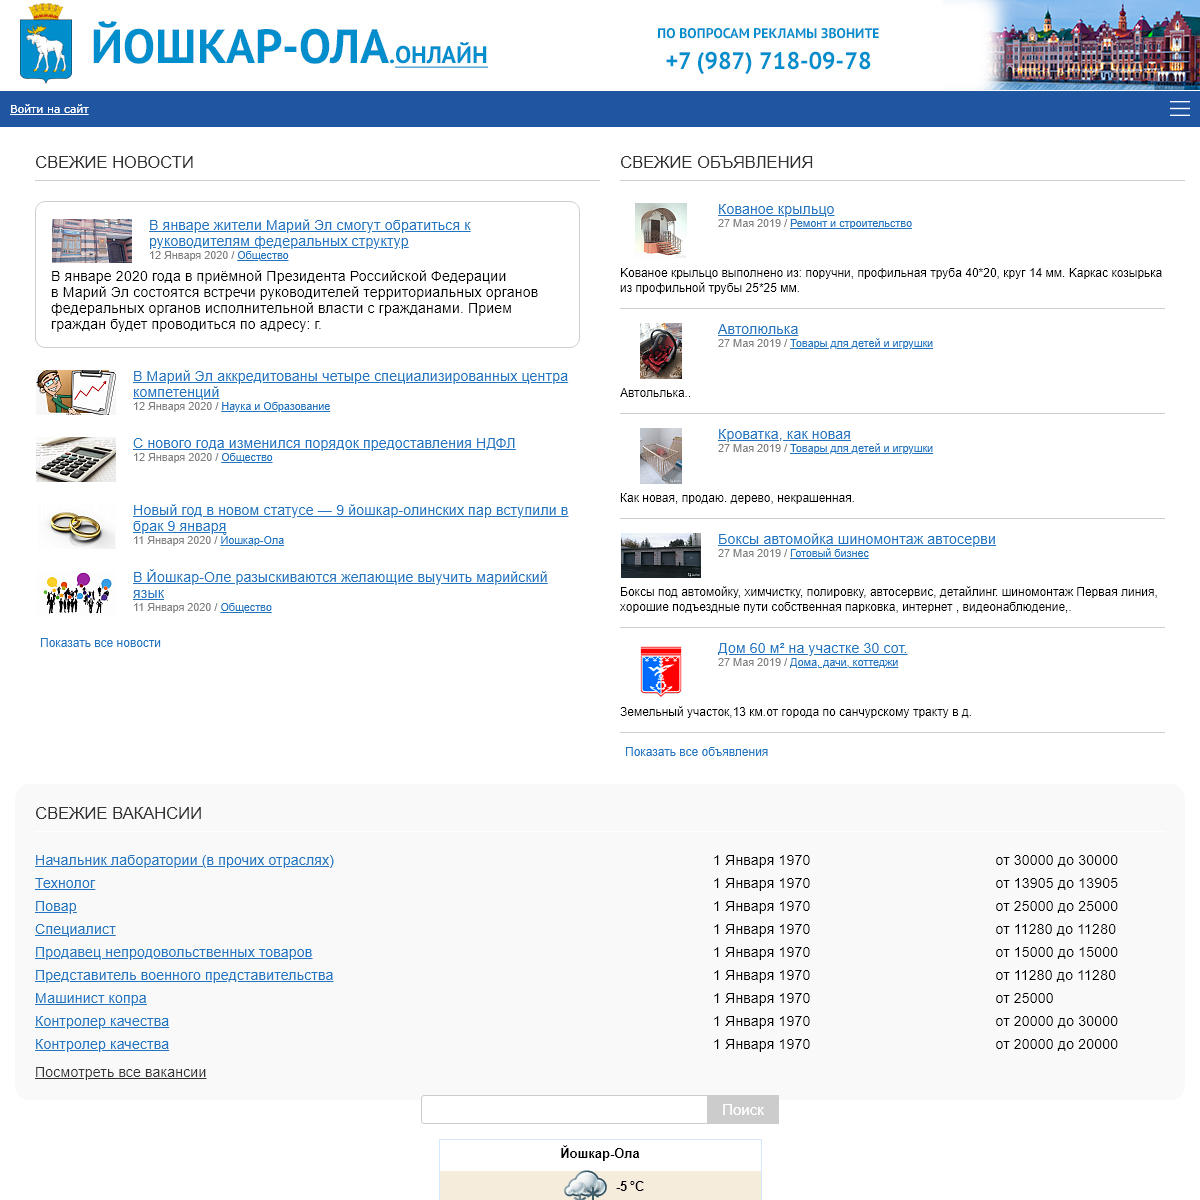 A complete backup of yola-online.ru